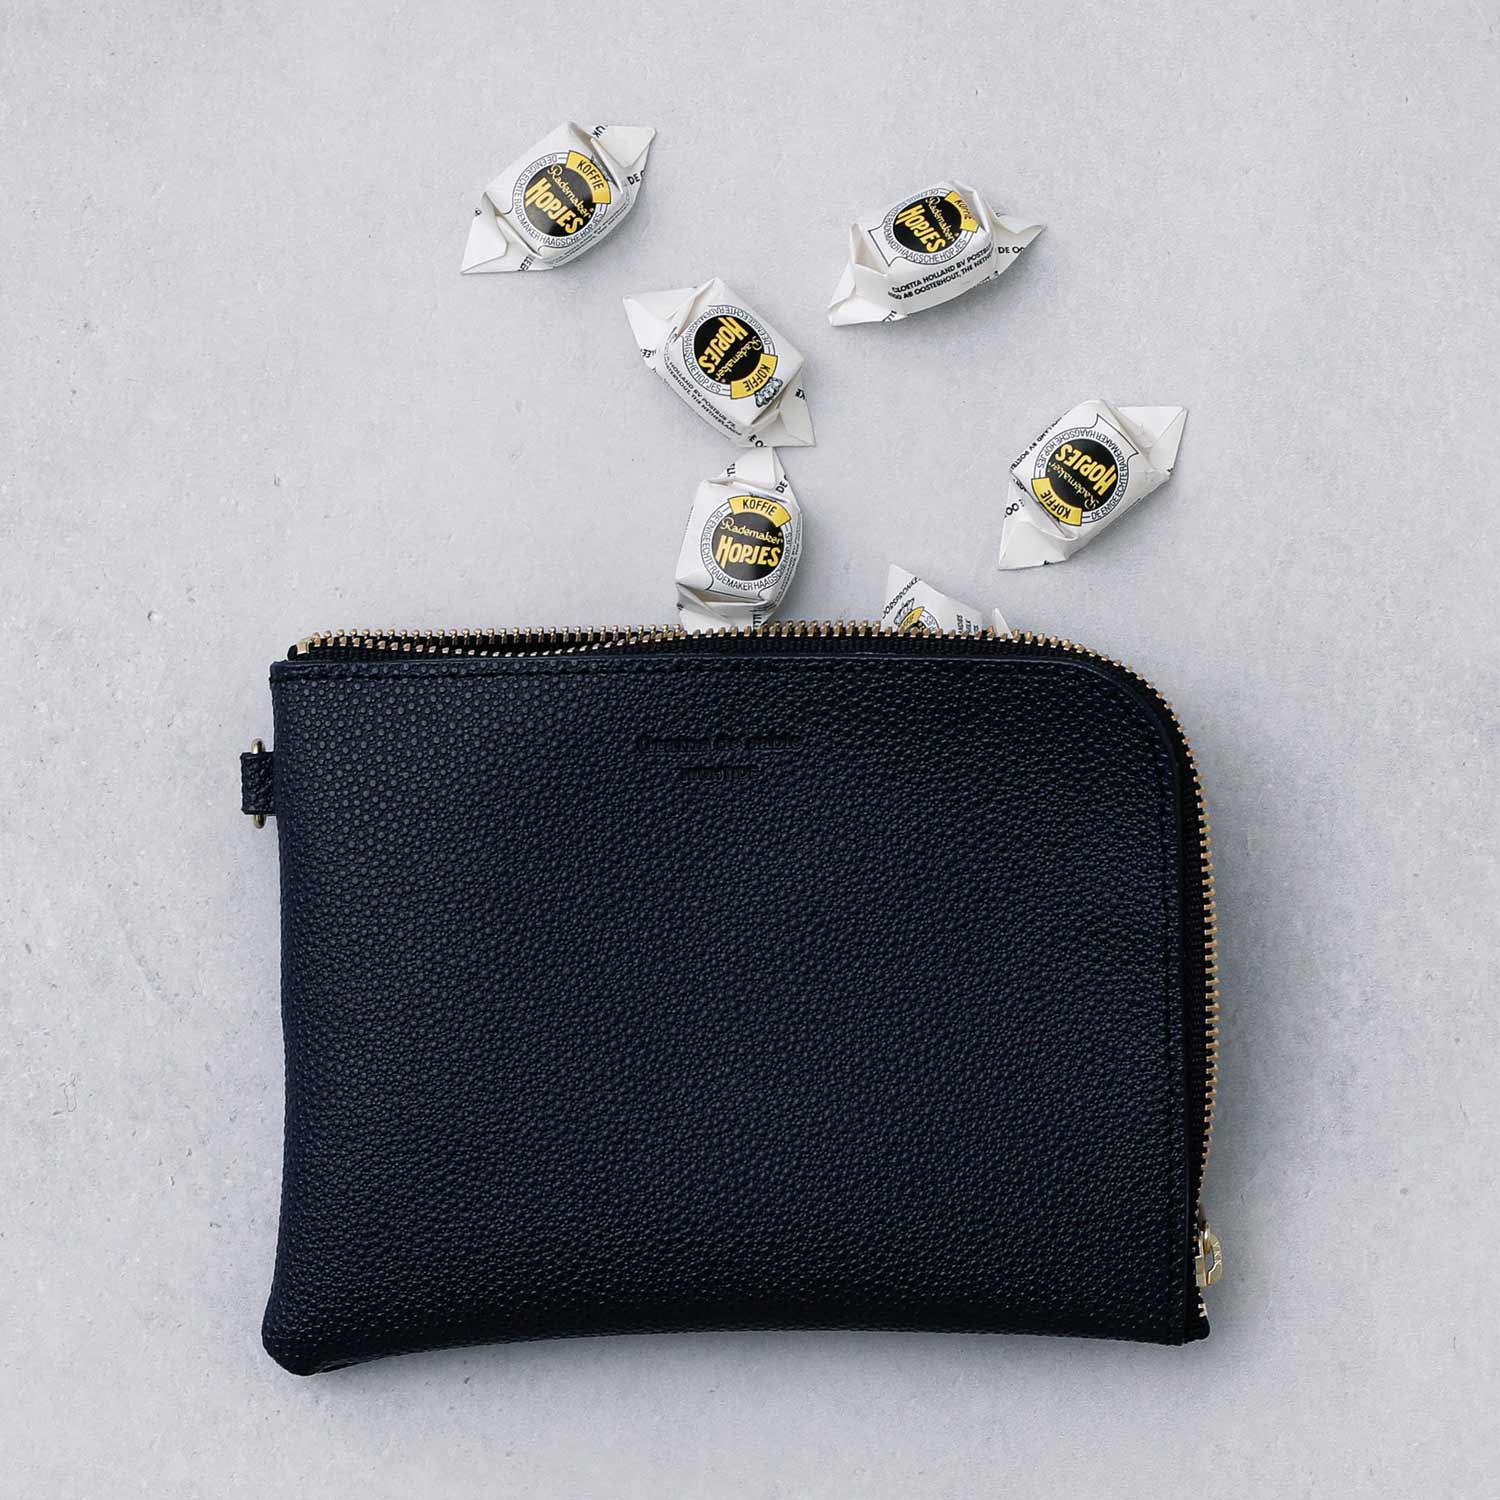  карман чехол для салфеток Grains de sable Saab ru сумка гигиенический место хранения бардачок Mini макияж фирменный магазин ограничение путешествие путешествие 